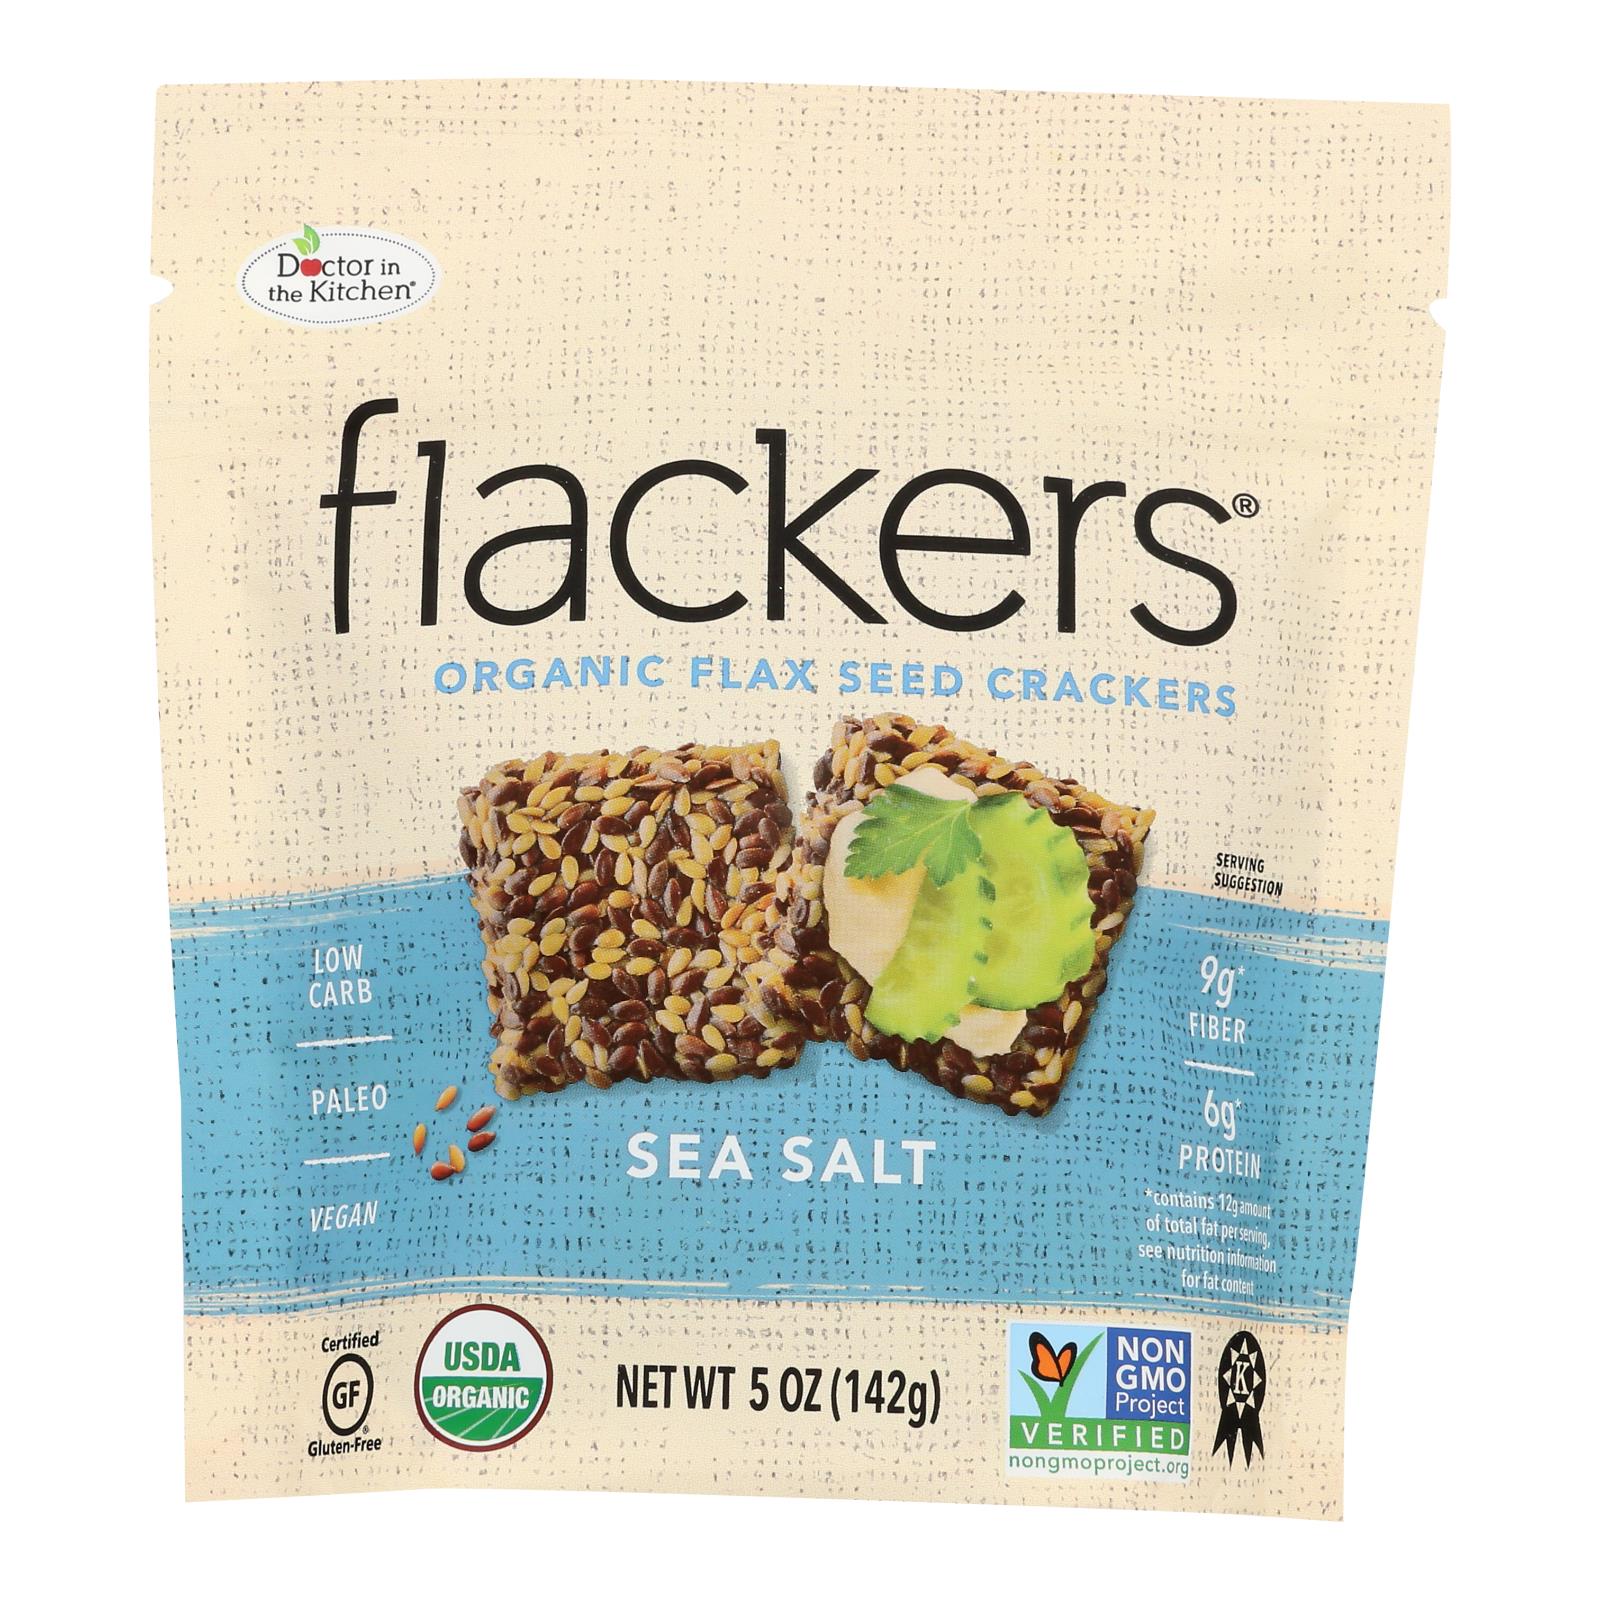 Doctor In The Kitchen - Organic Flax Seed Crackers - Sea Salt - 6개 묶음상품 - 5 oz.